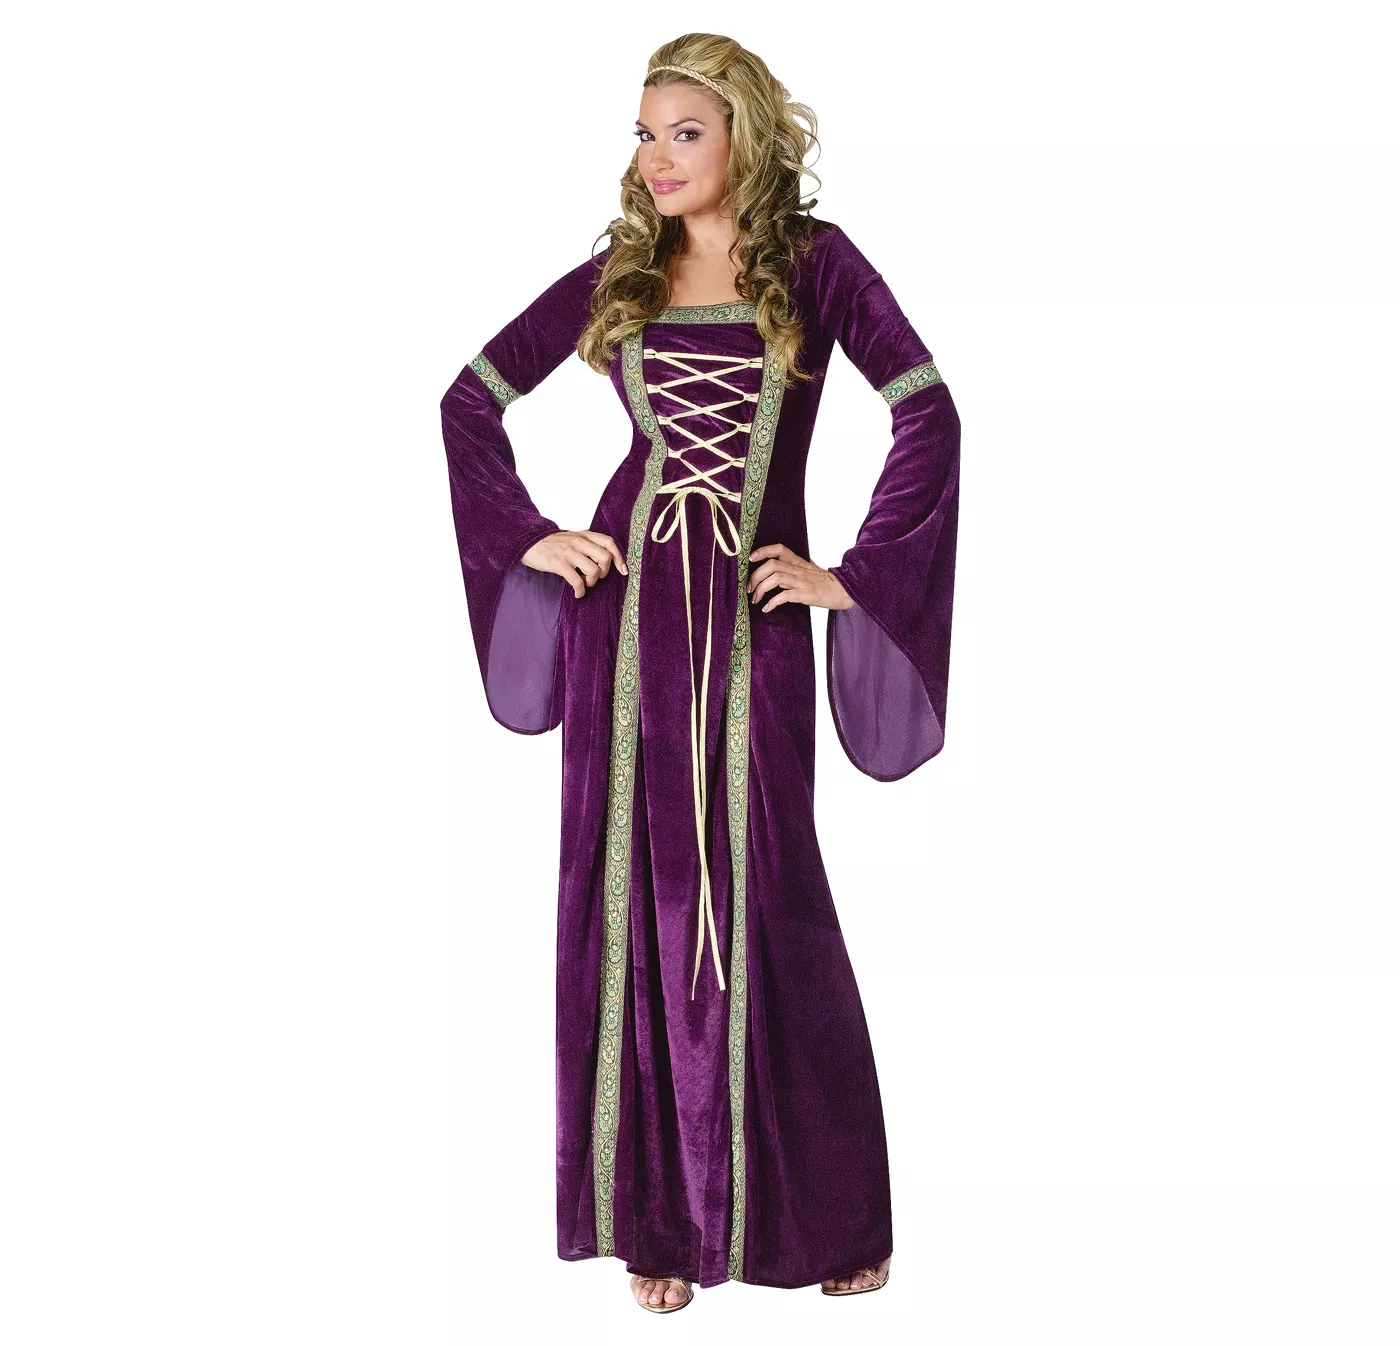 Women's Renaissance Lady Costume - image 1 of 1